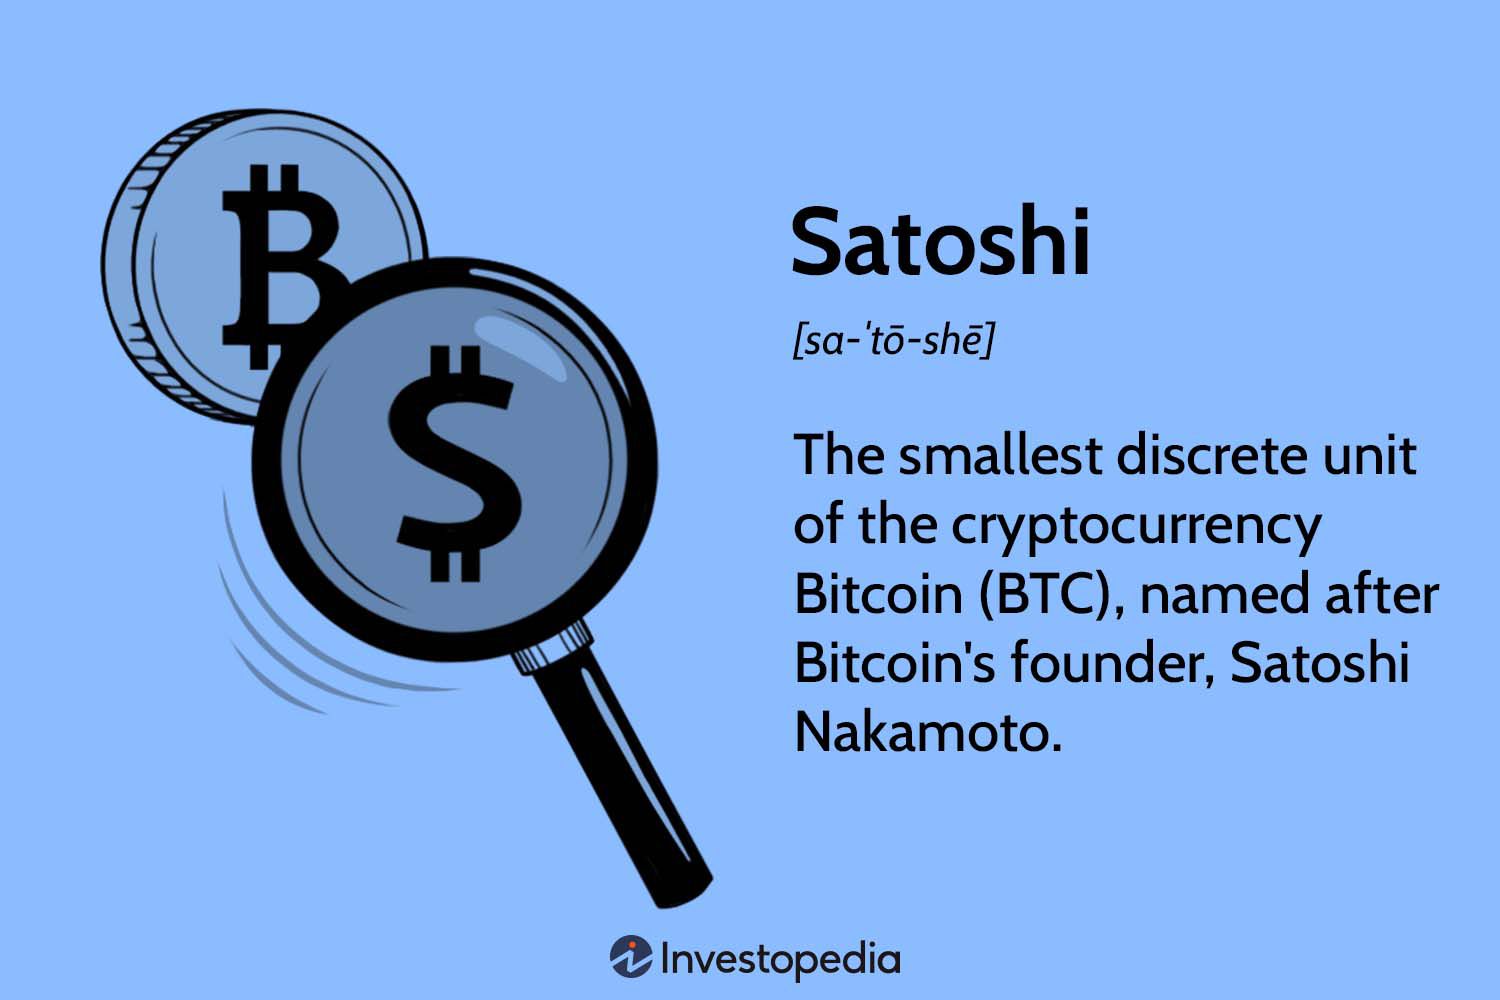 Satoshi to USD / BTC Converter & Calculator